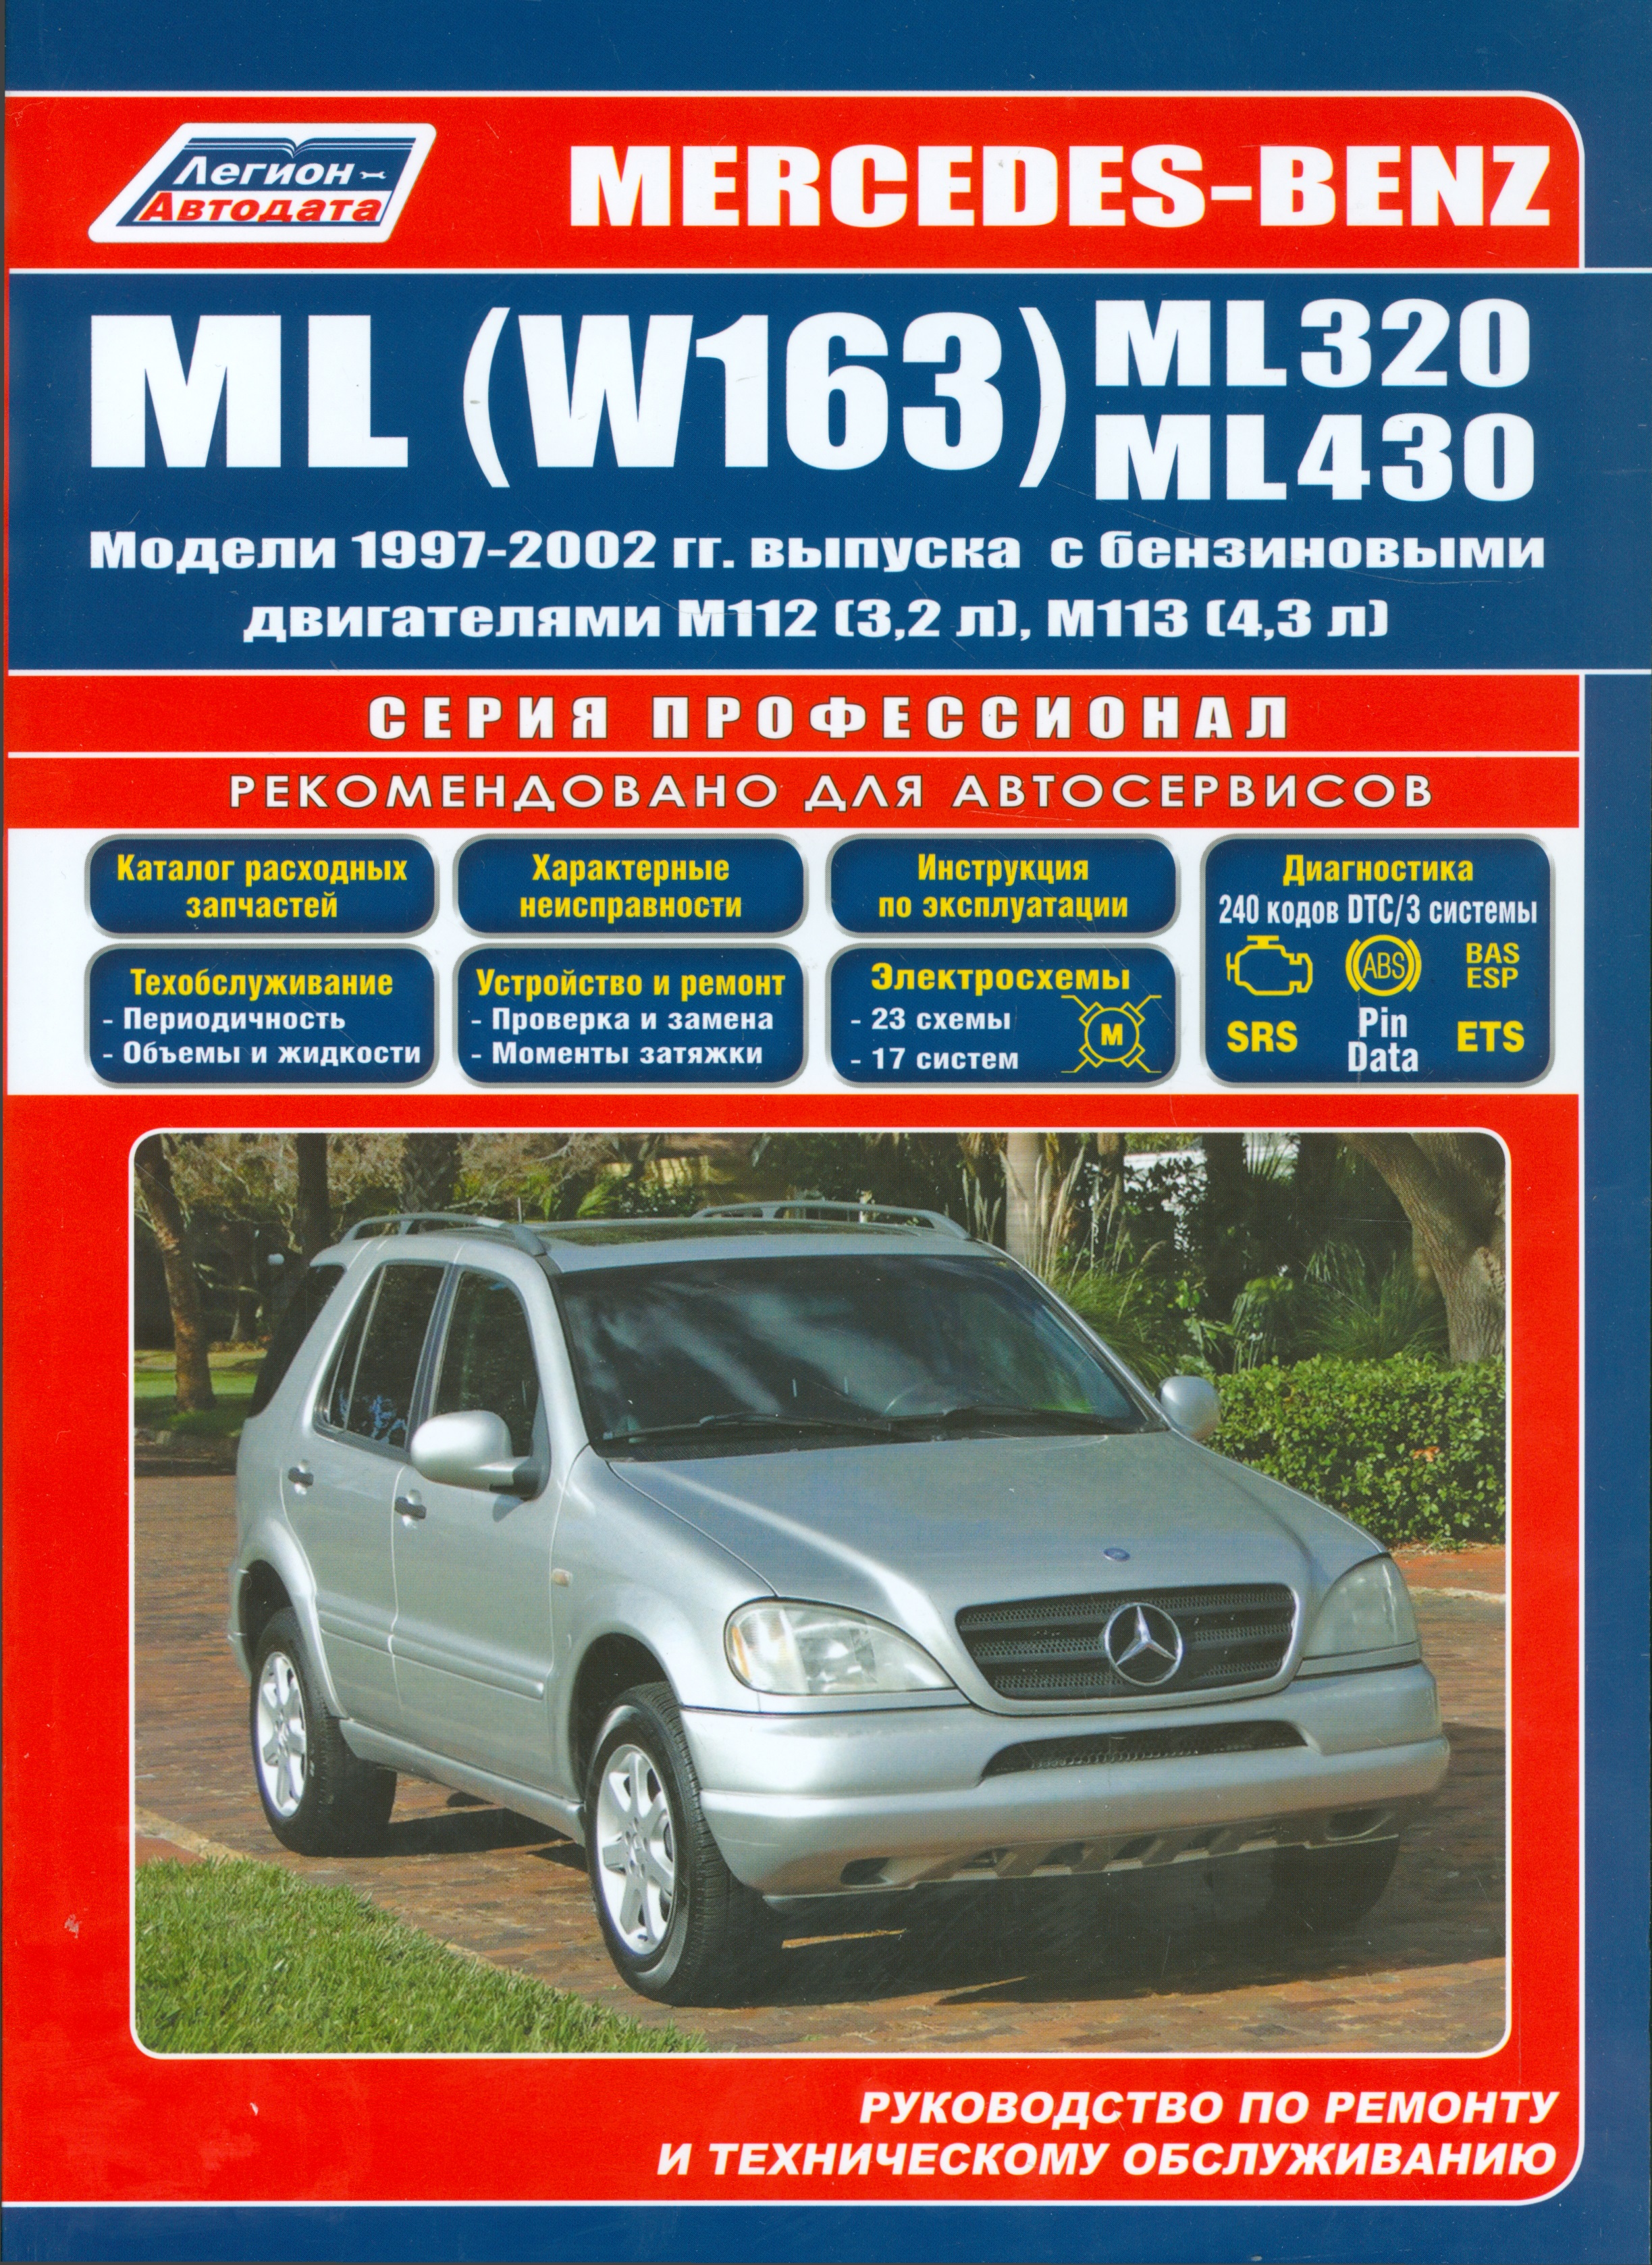 Mercedes-Benz ML (W163) ML320 ML430 Мод. 1997-2002 гг. вып. С бенз. (мПрофессионал)